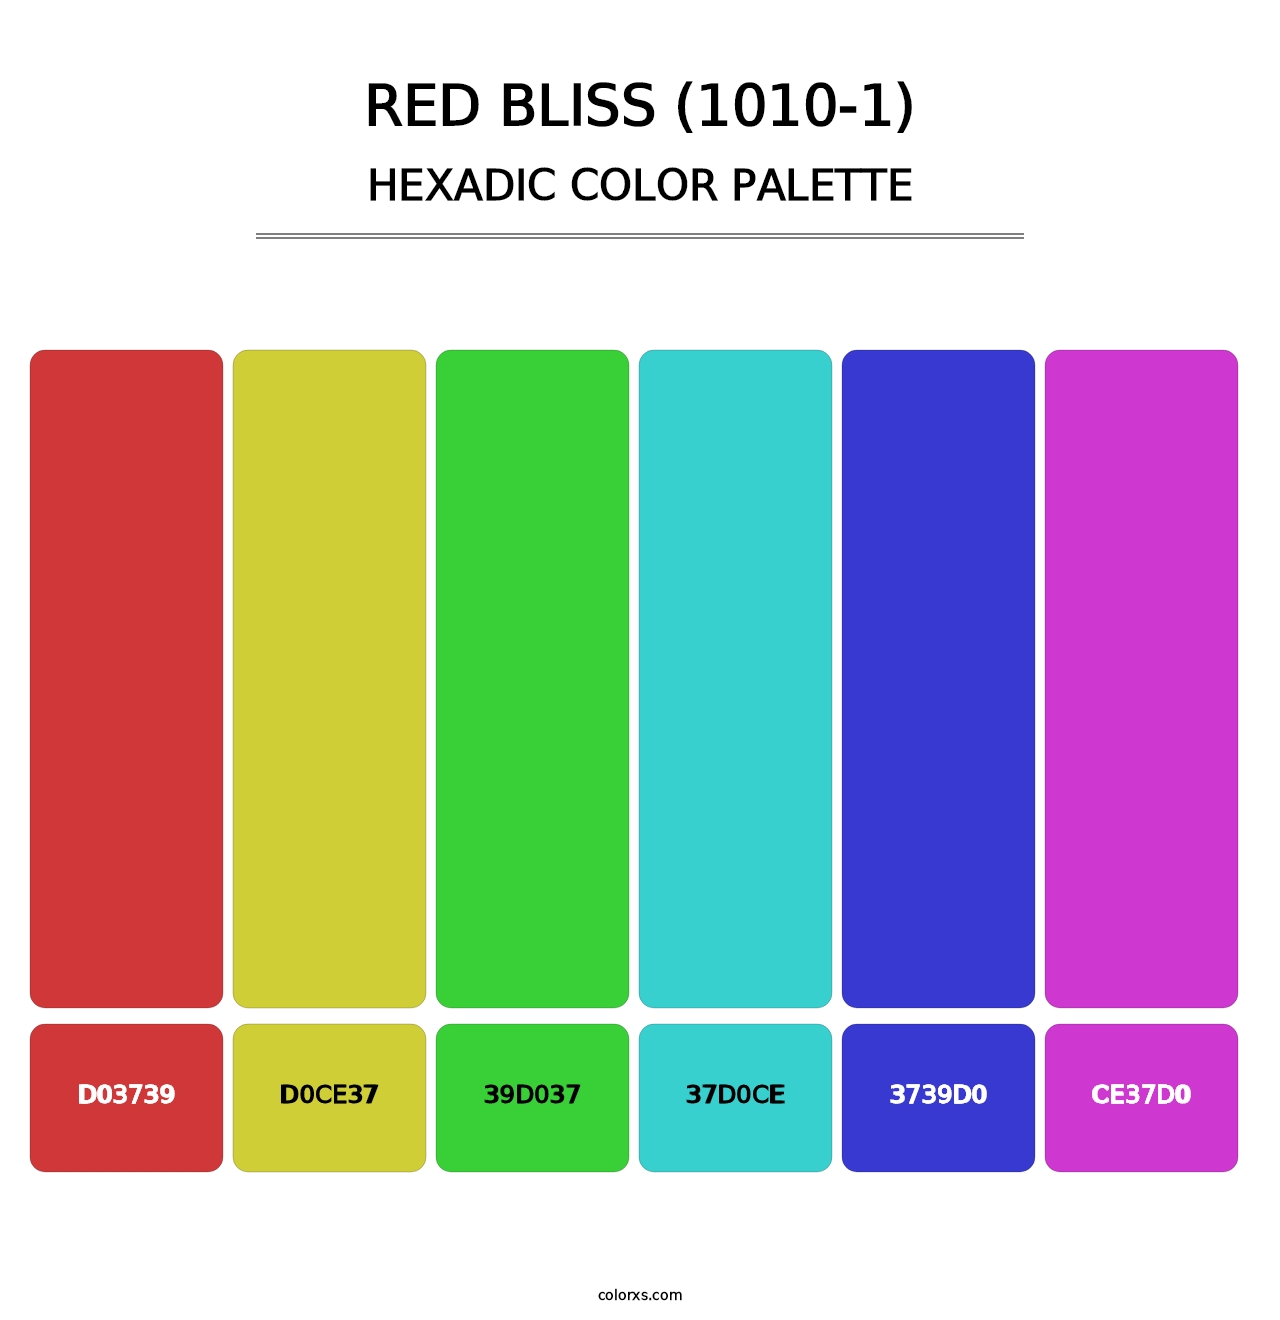 Red Bliss (1010-1) - Hexadic Color Palette